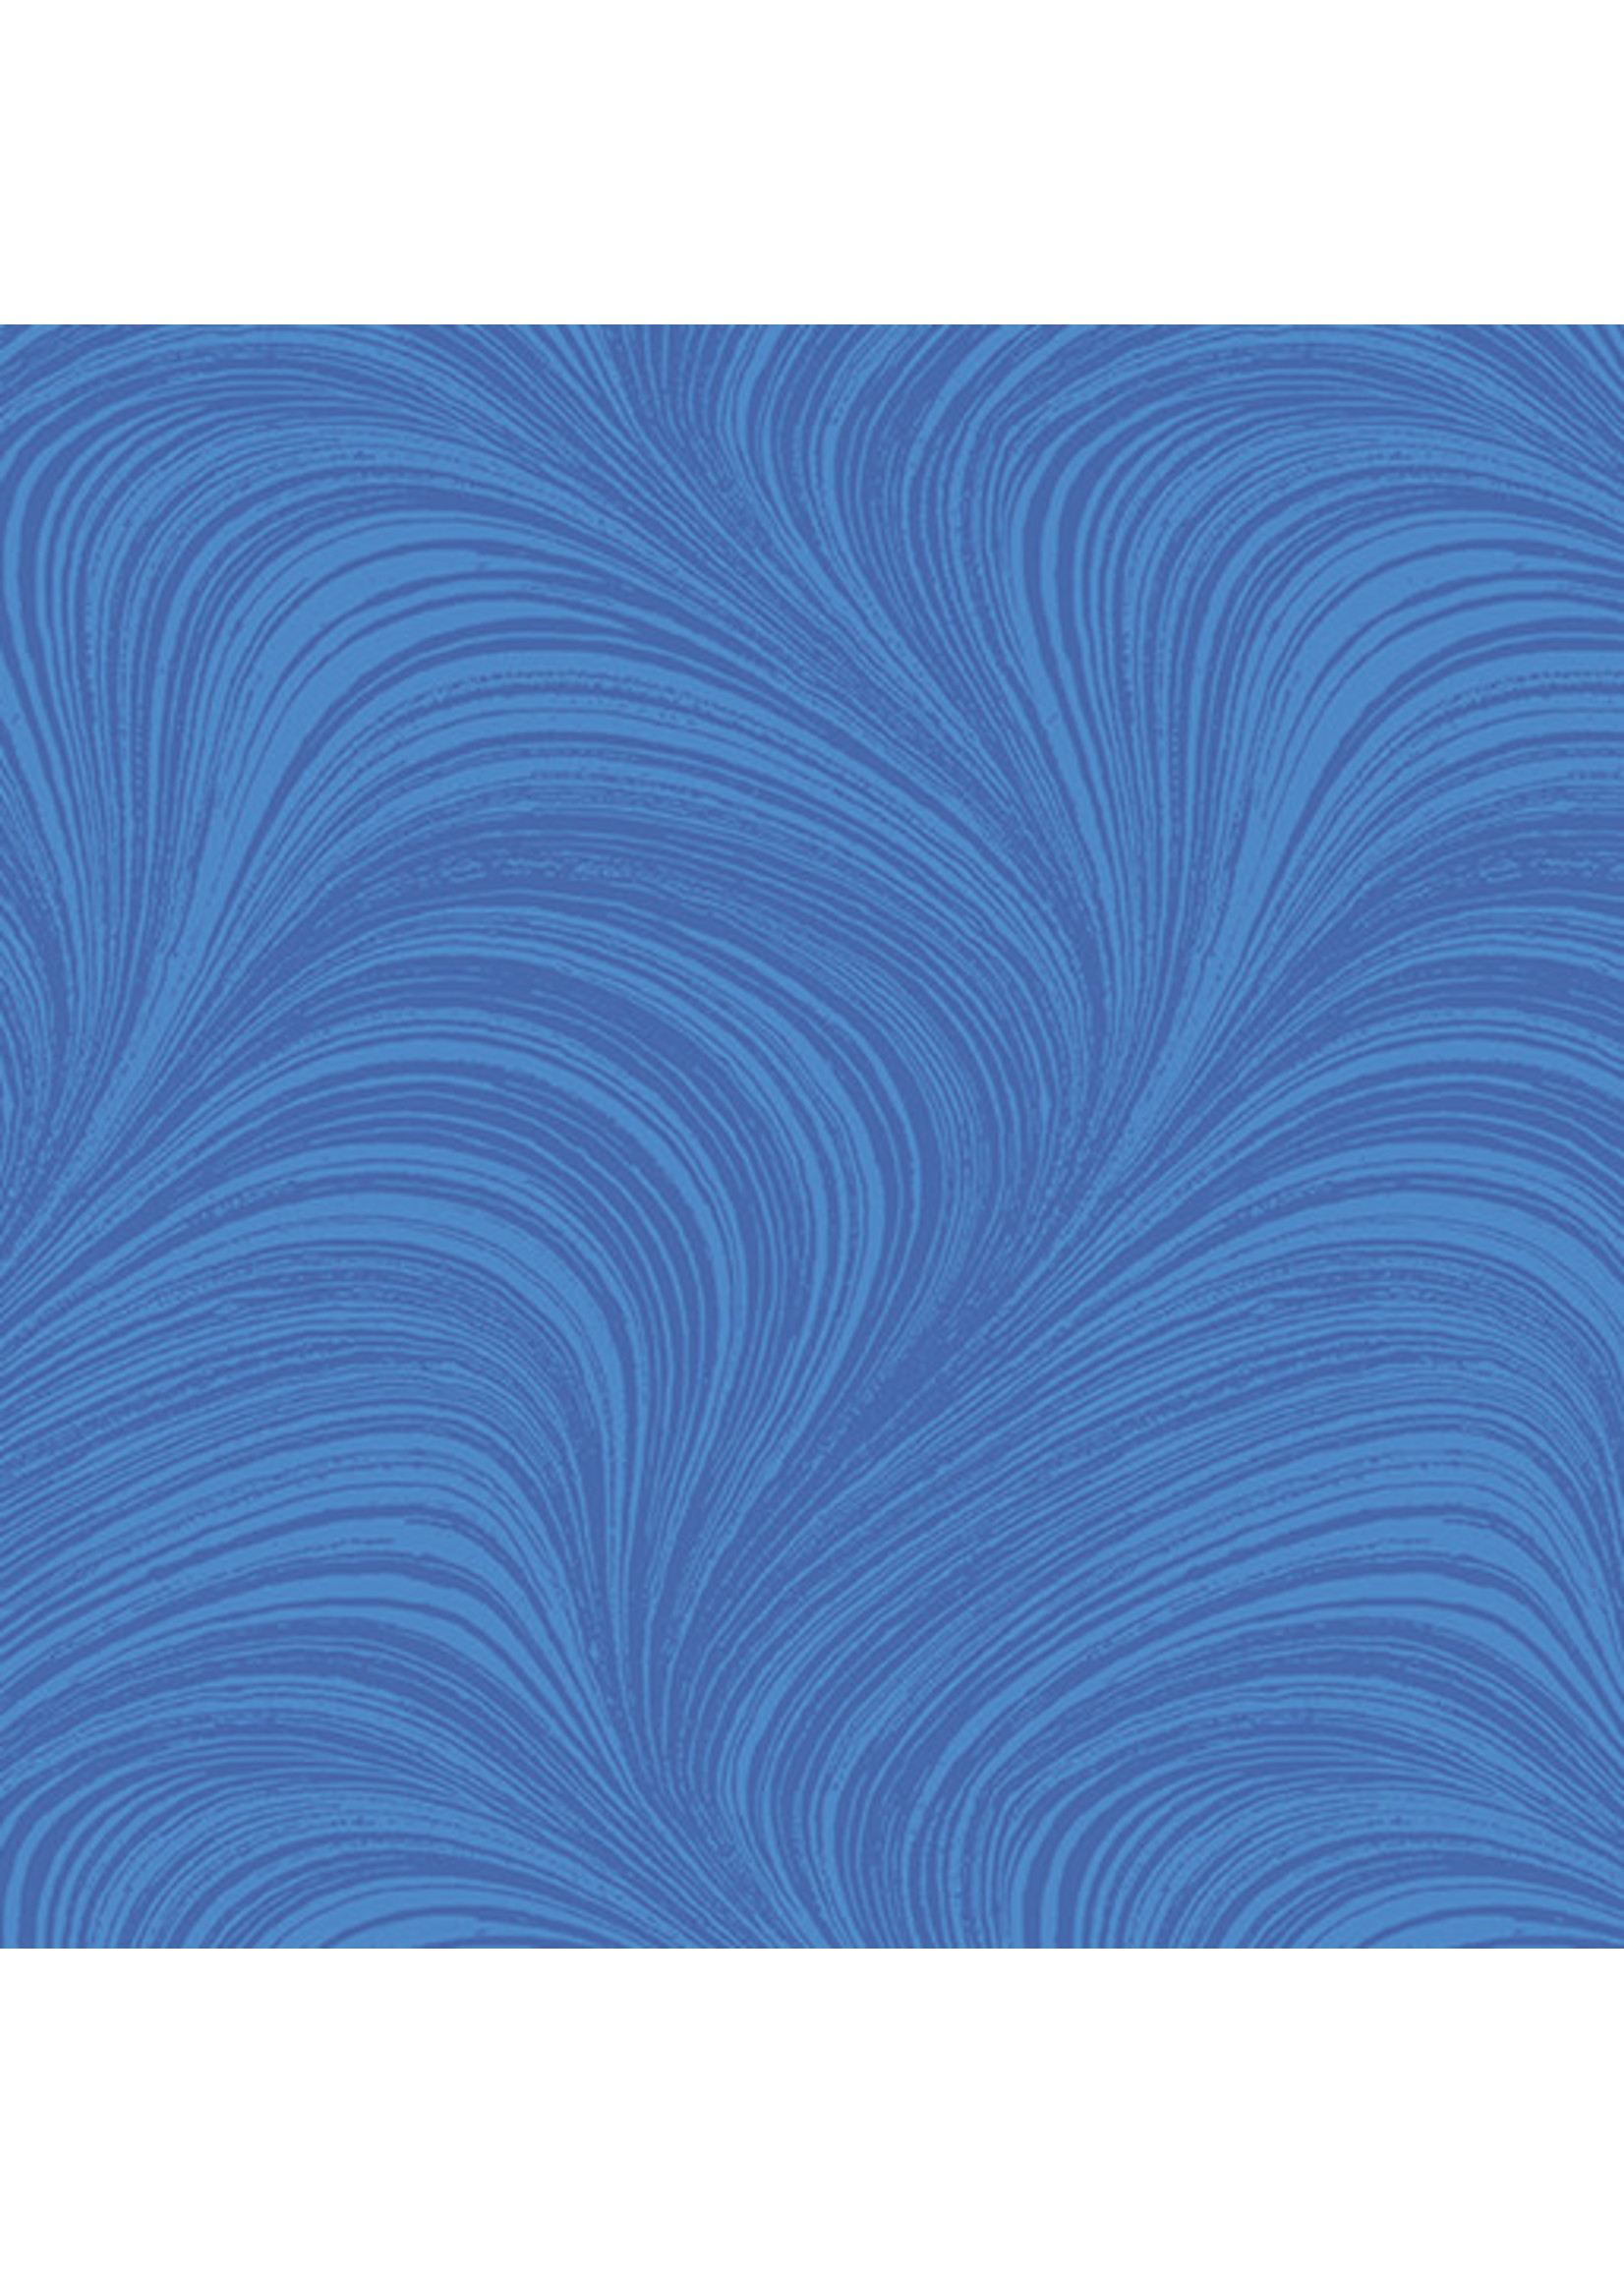 Benartex Studio Wave Texture - Medium Blue